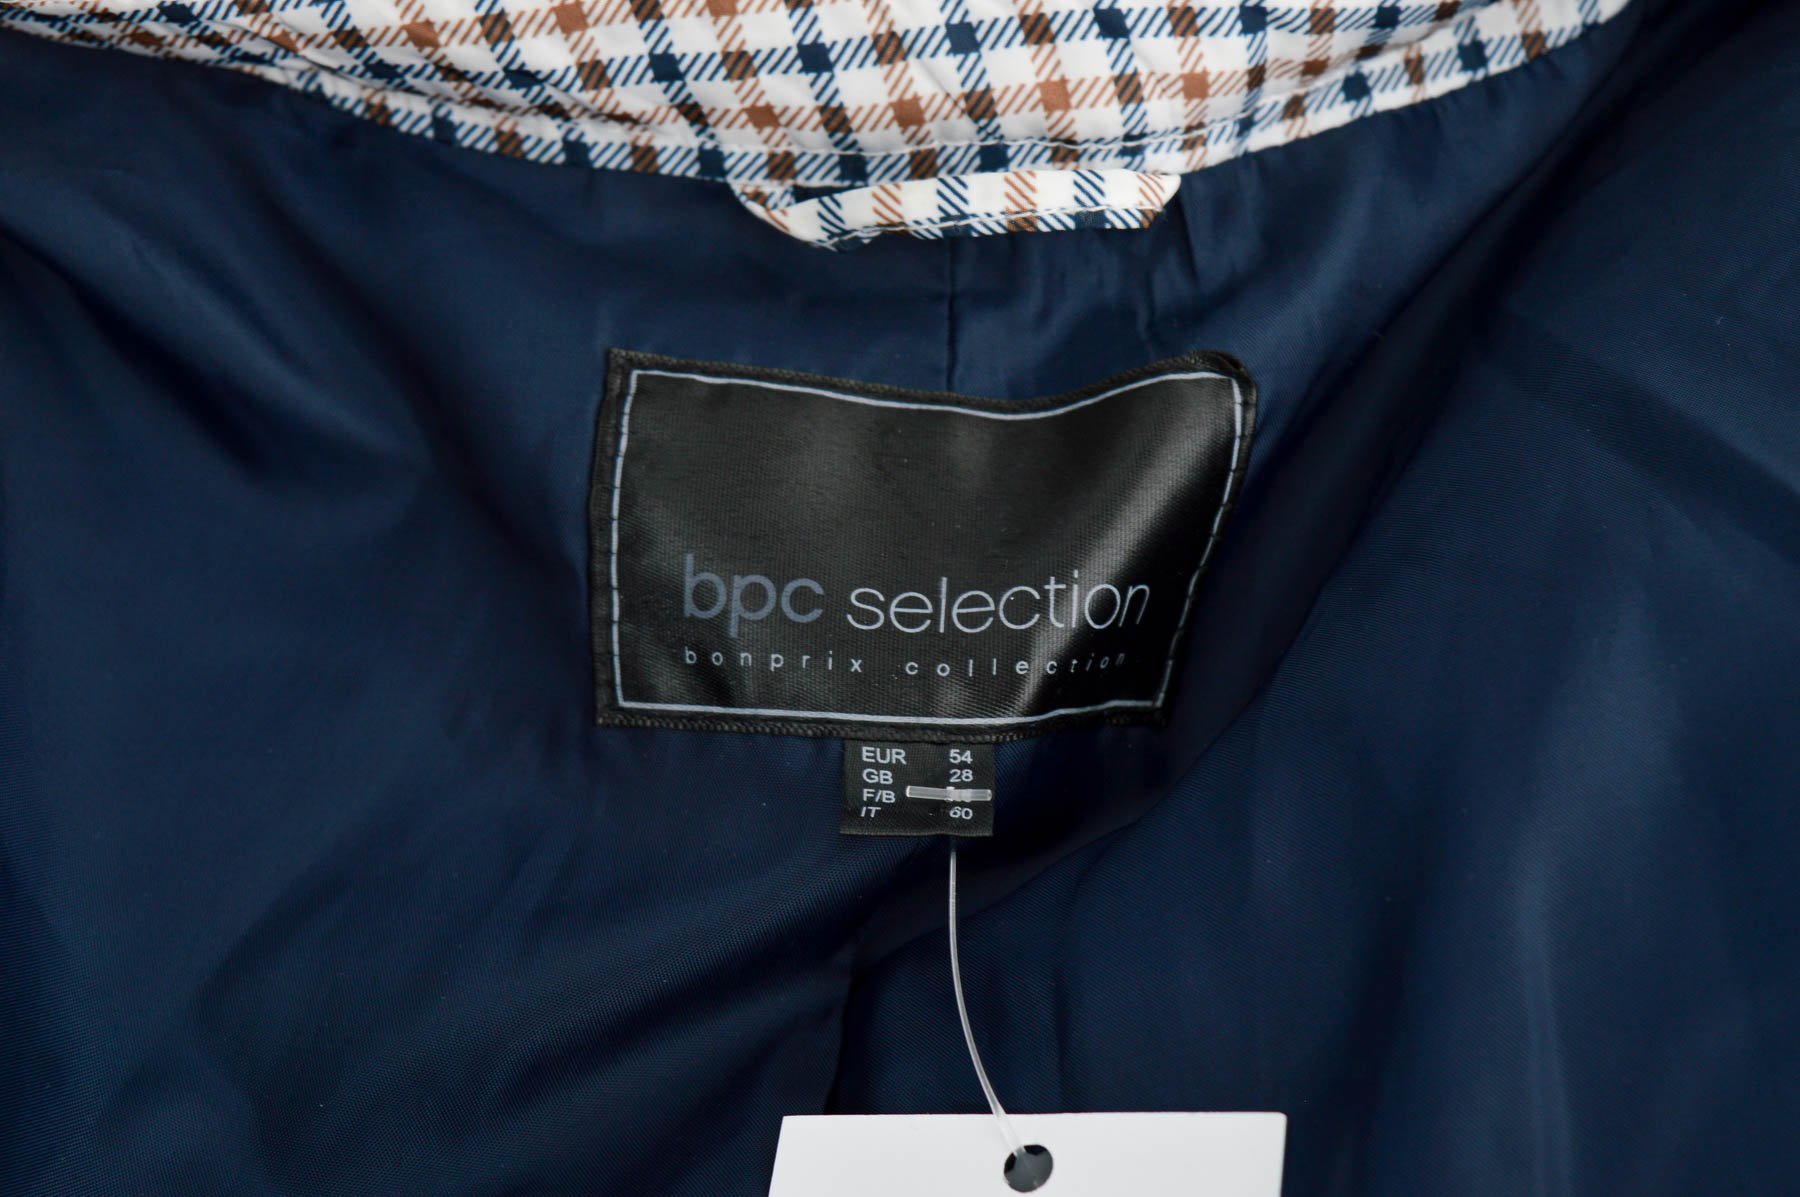 Female jacket - Bpc selection bonprix collection - Second hand